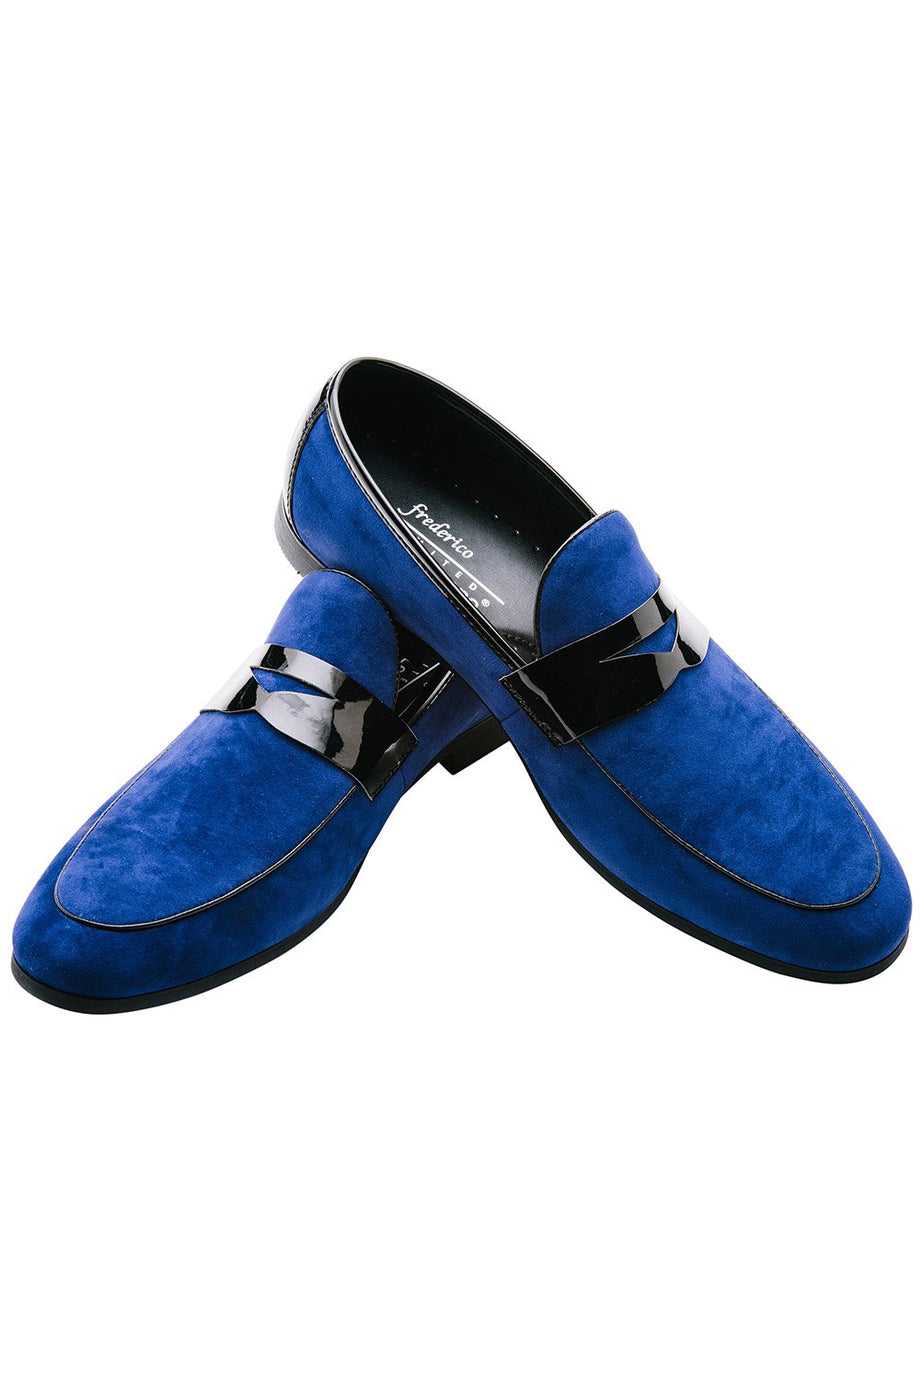 Frederico Leone "New Yorker" Blue Suede Frederico Leone Tuxedo Shoes